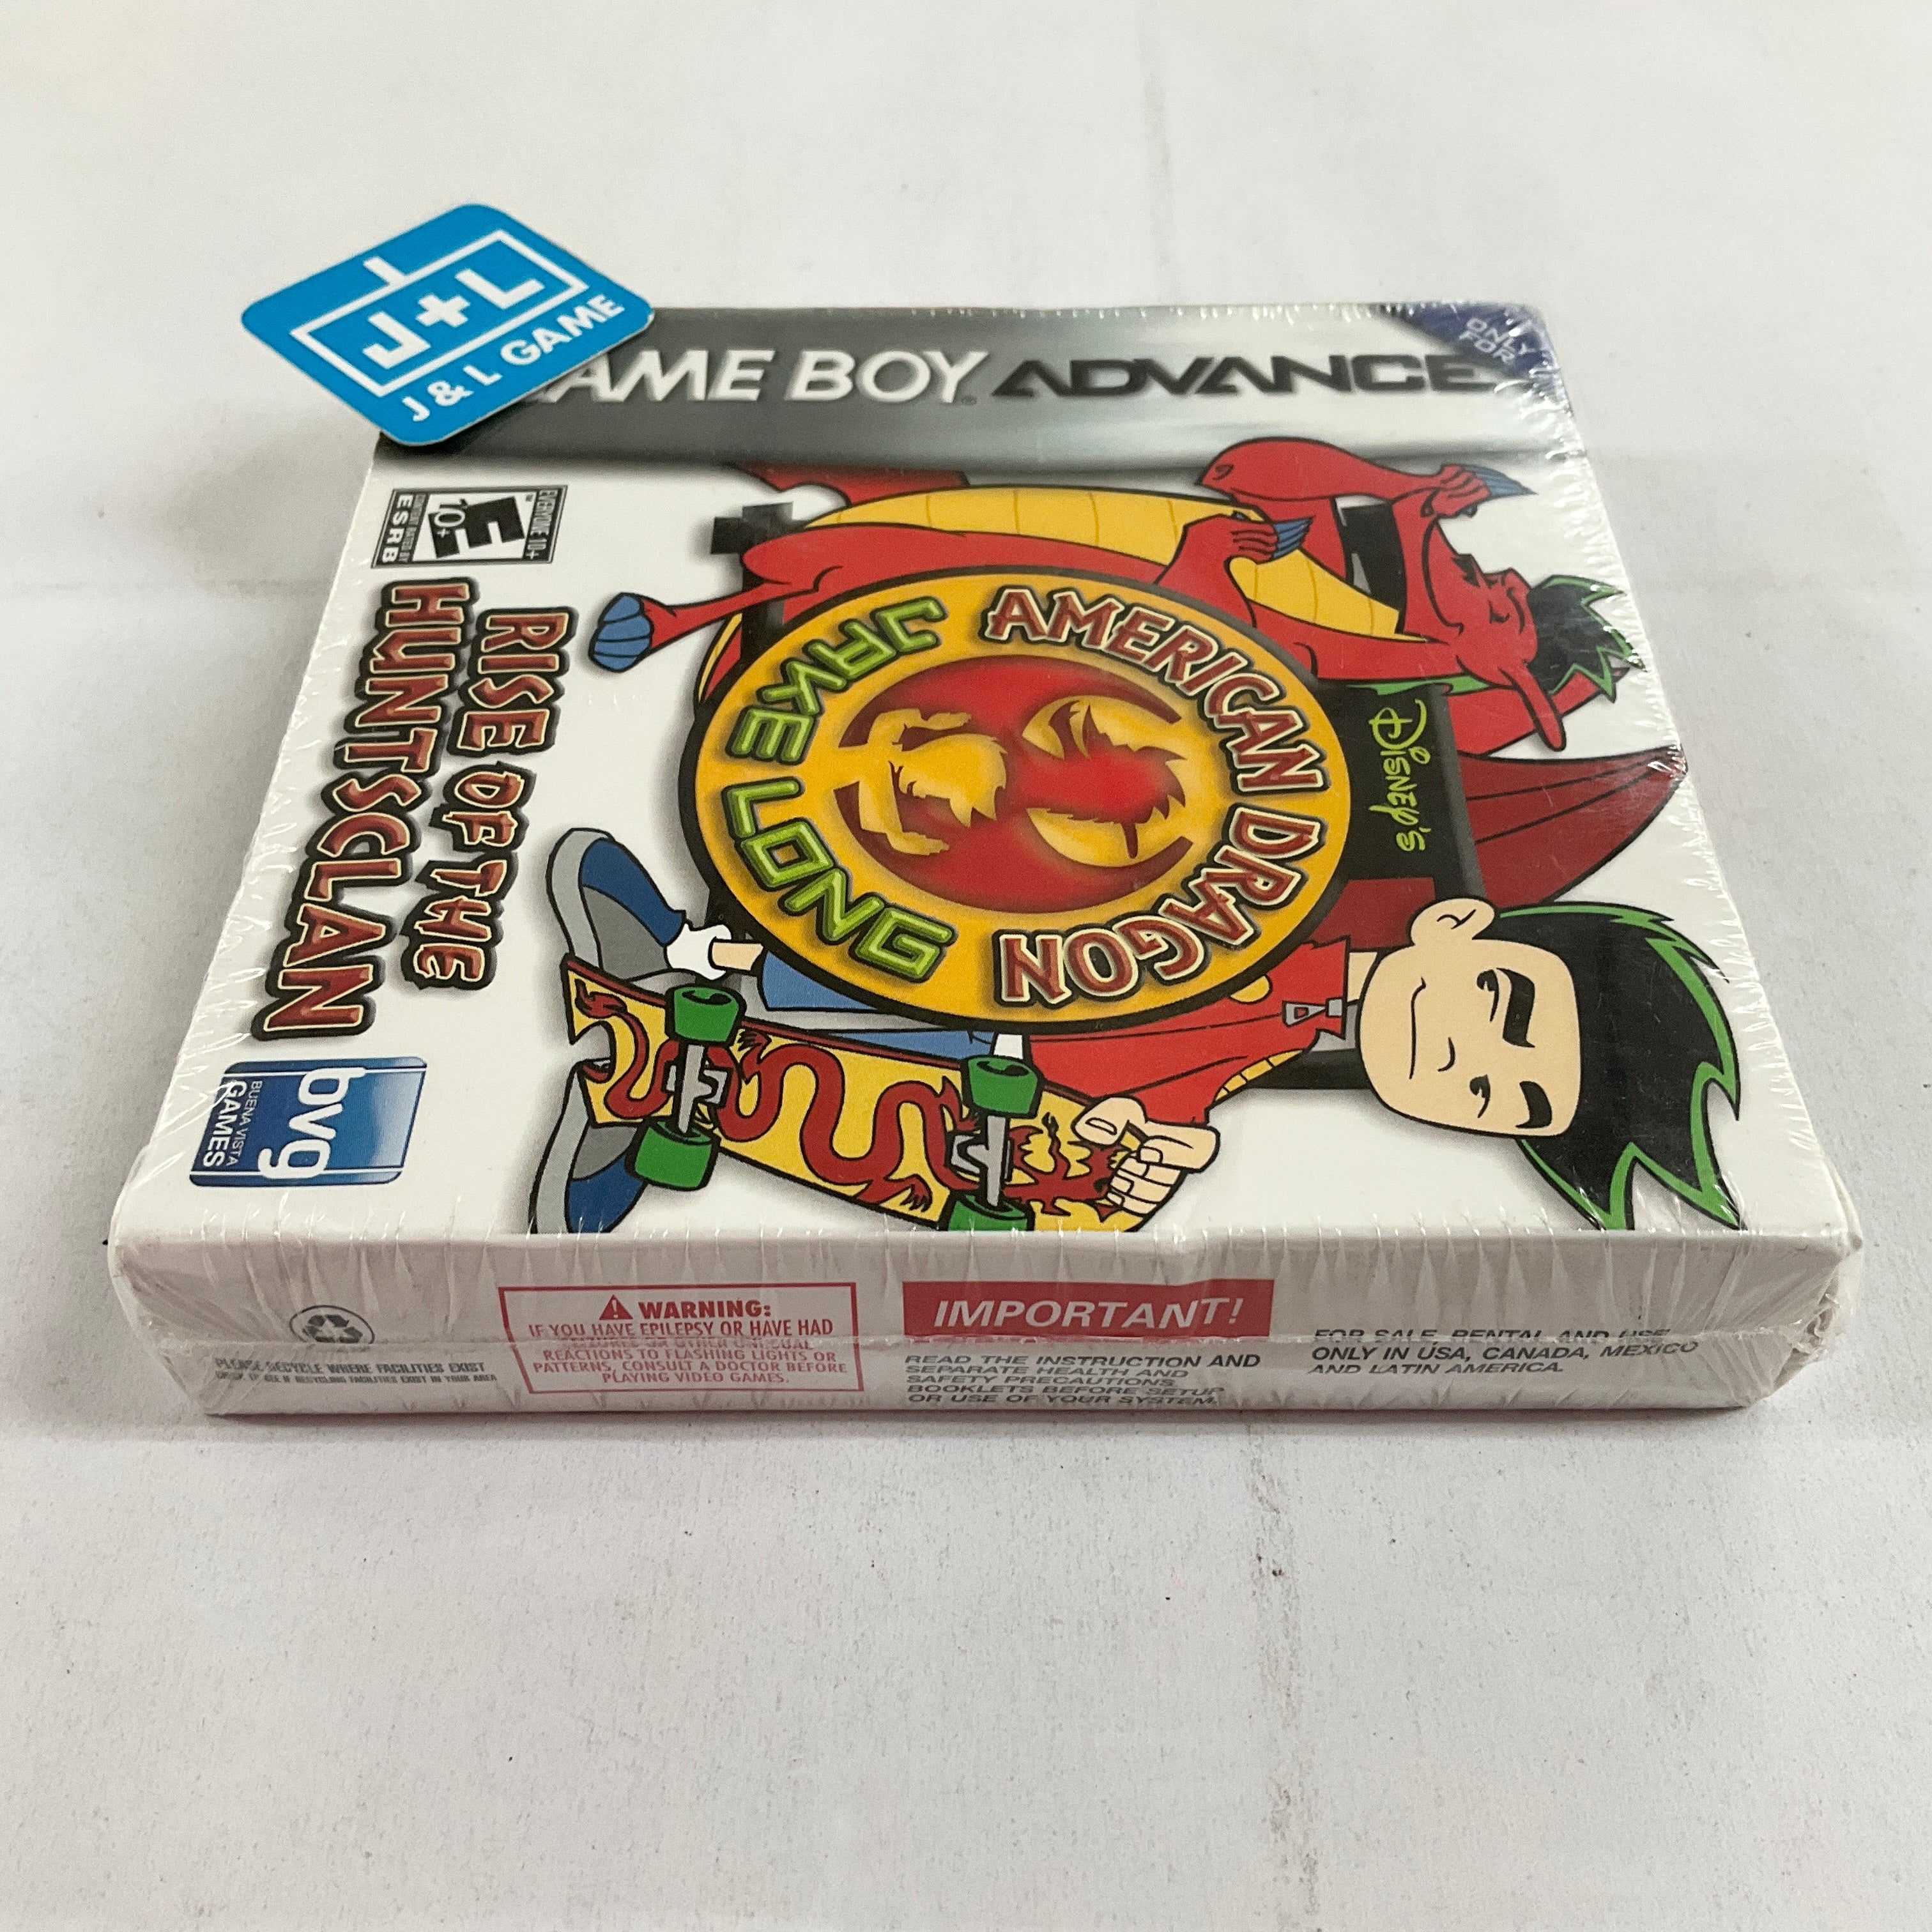 Disney's American Dragon: Jake Long, Rise of the Huntsclan - (GBA) Game Boy Advance Video Games Buena Vista Games   